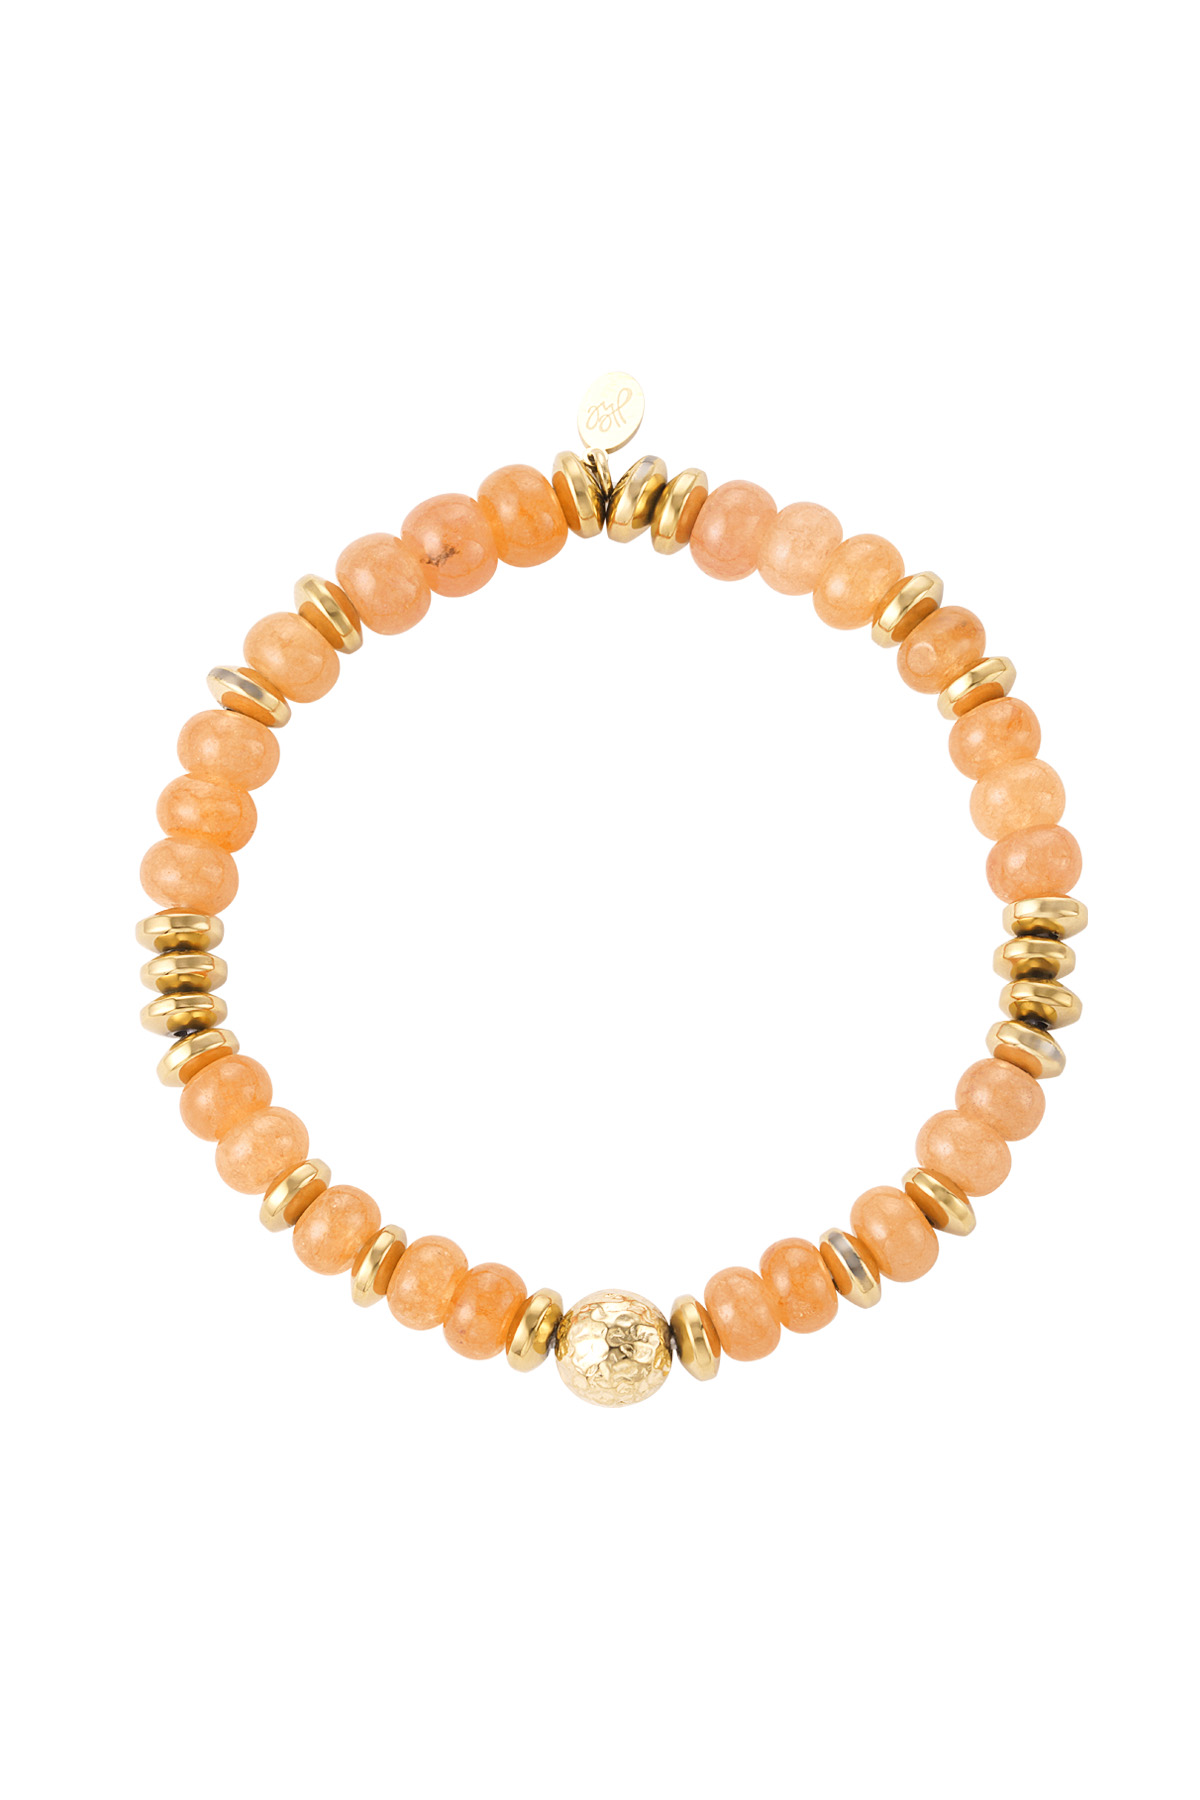 Armband kleurrijke steentjes - oranje & goud Steen h5 